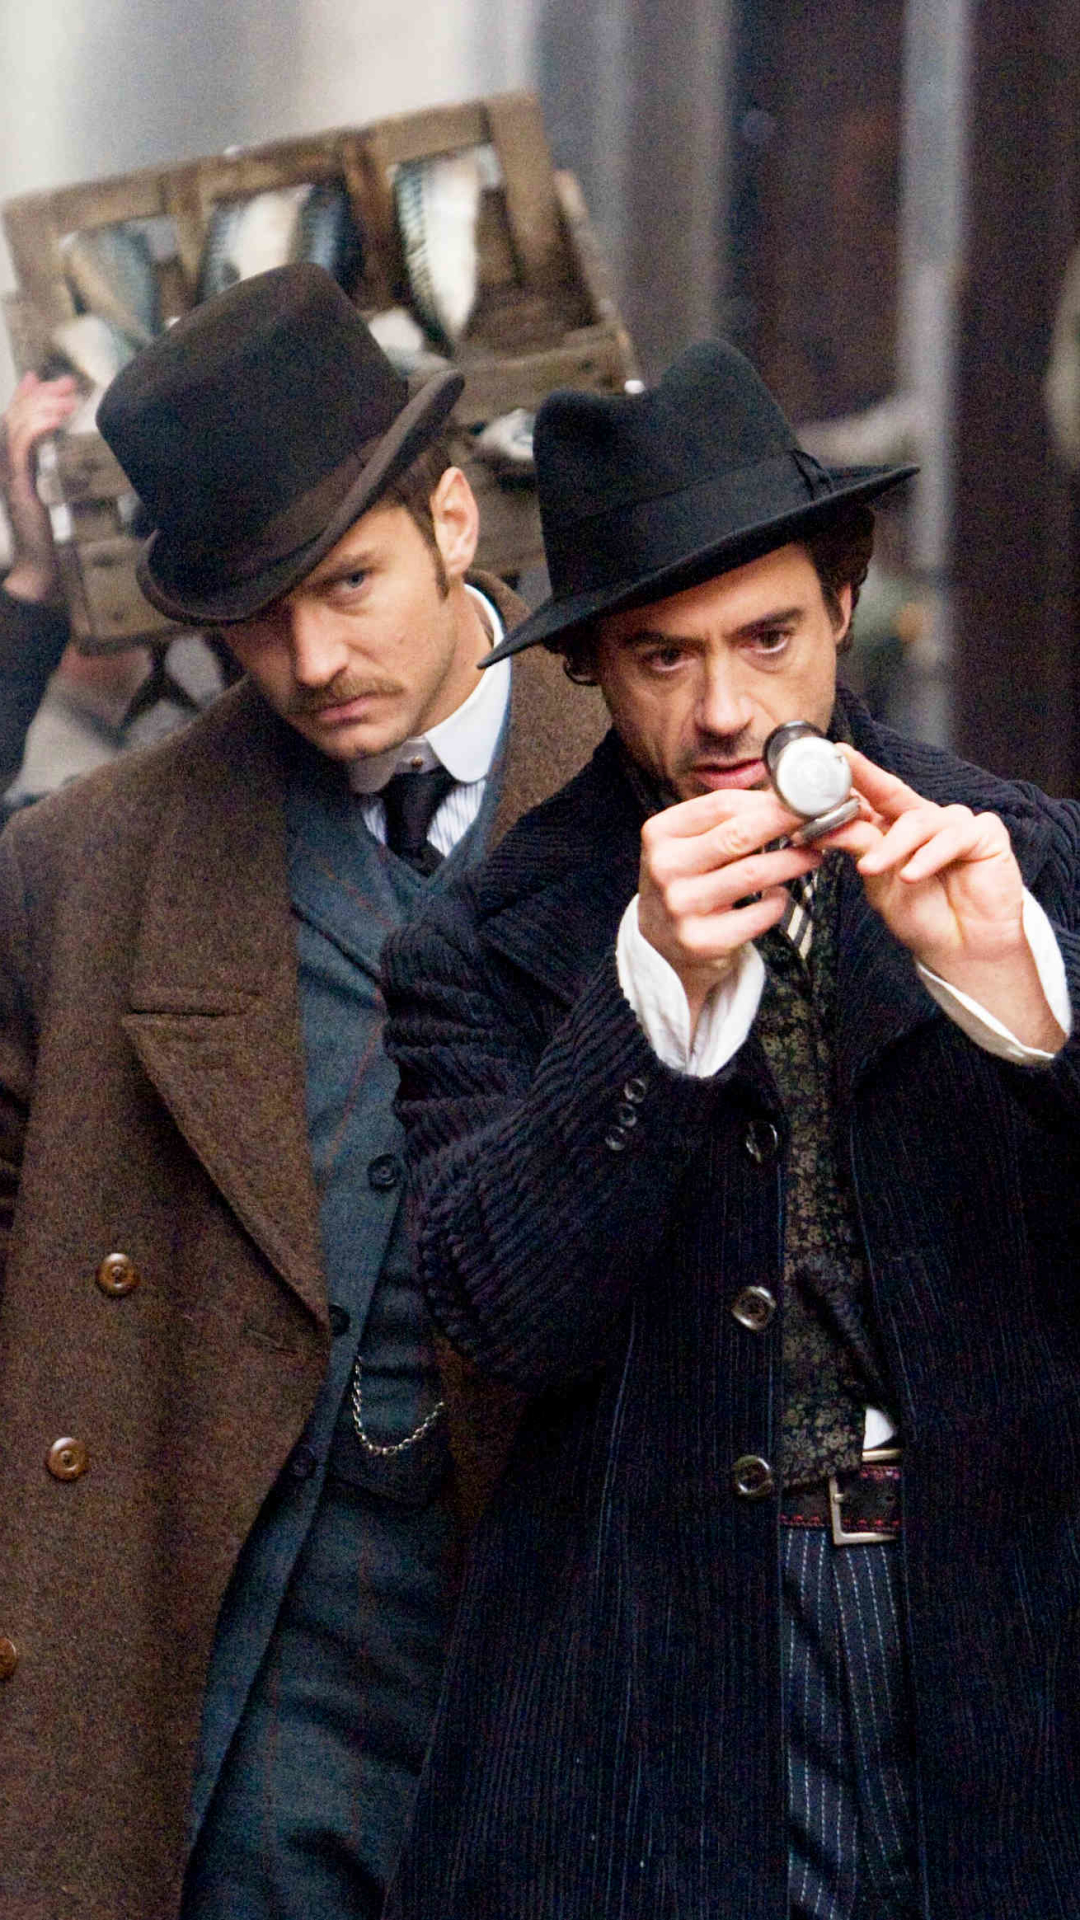 Handy-Wallpaper Filme, Sherlock Holmes kostenlos herunterladen.